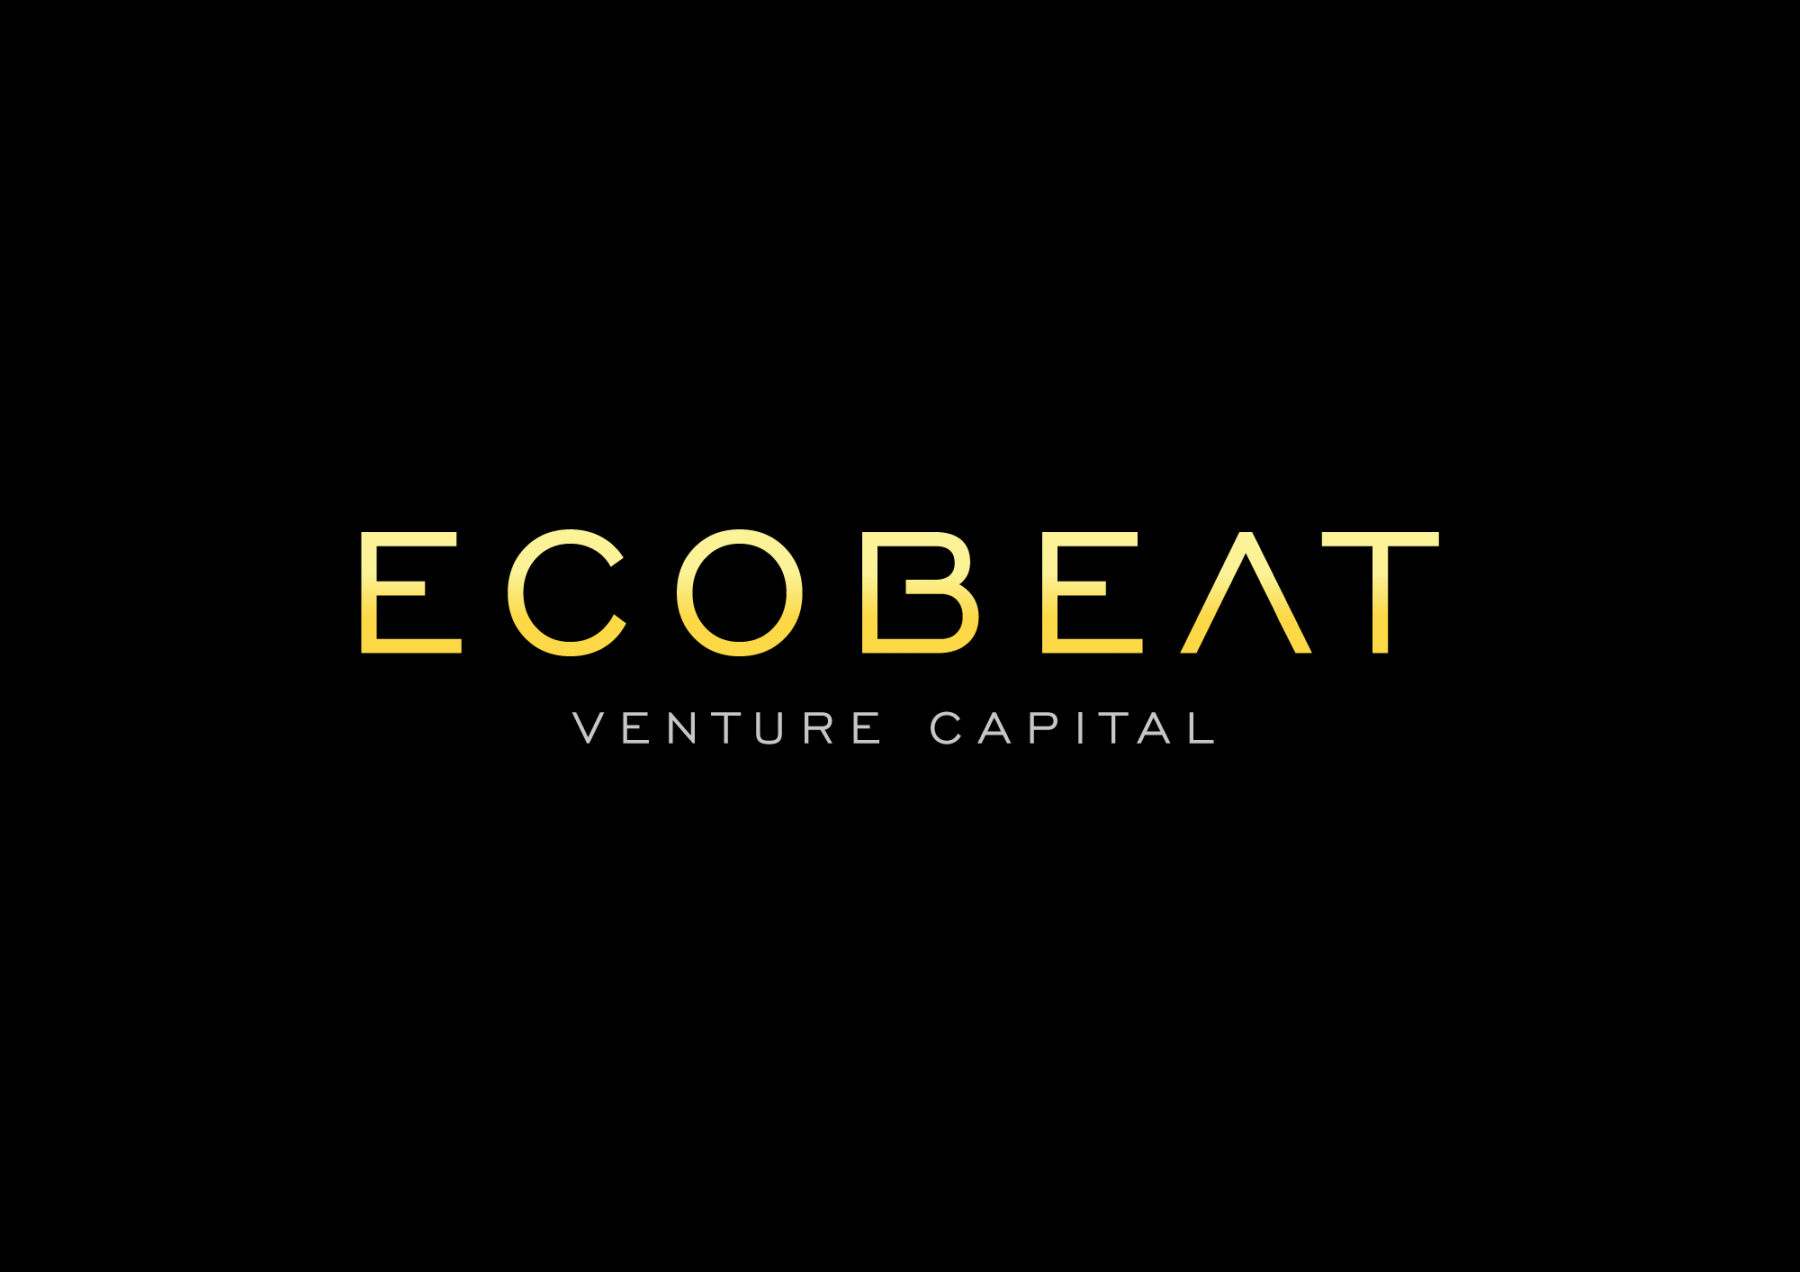 Ecobeat Venture capital logo